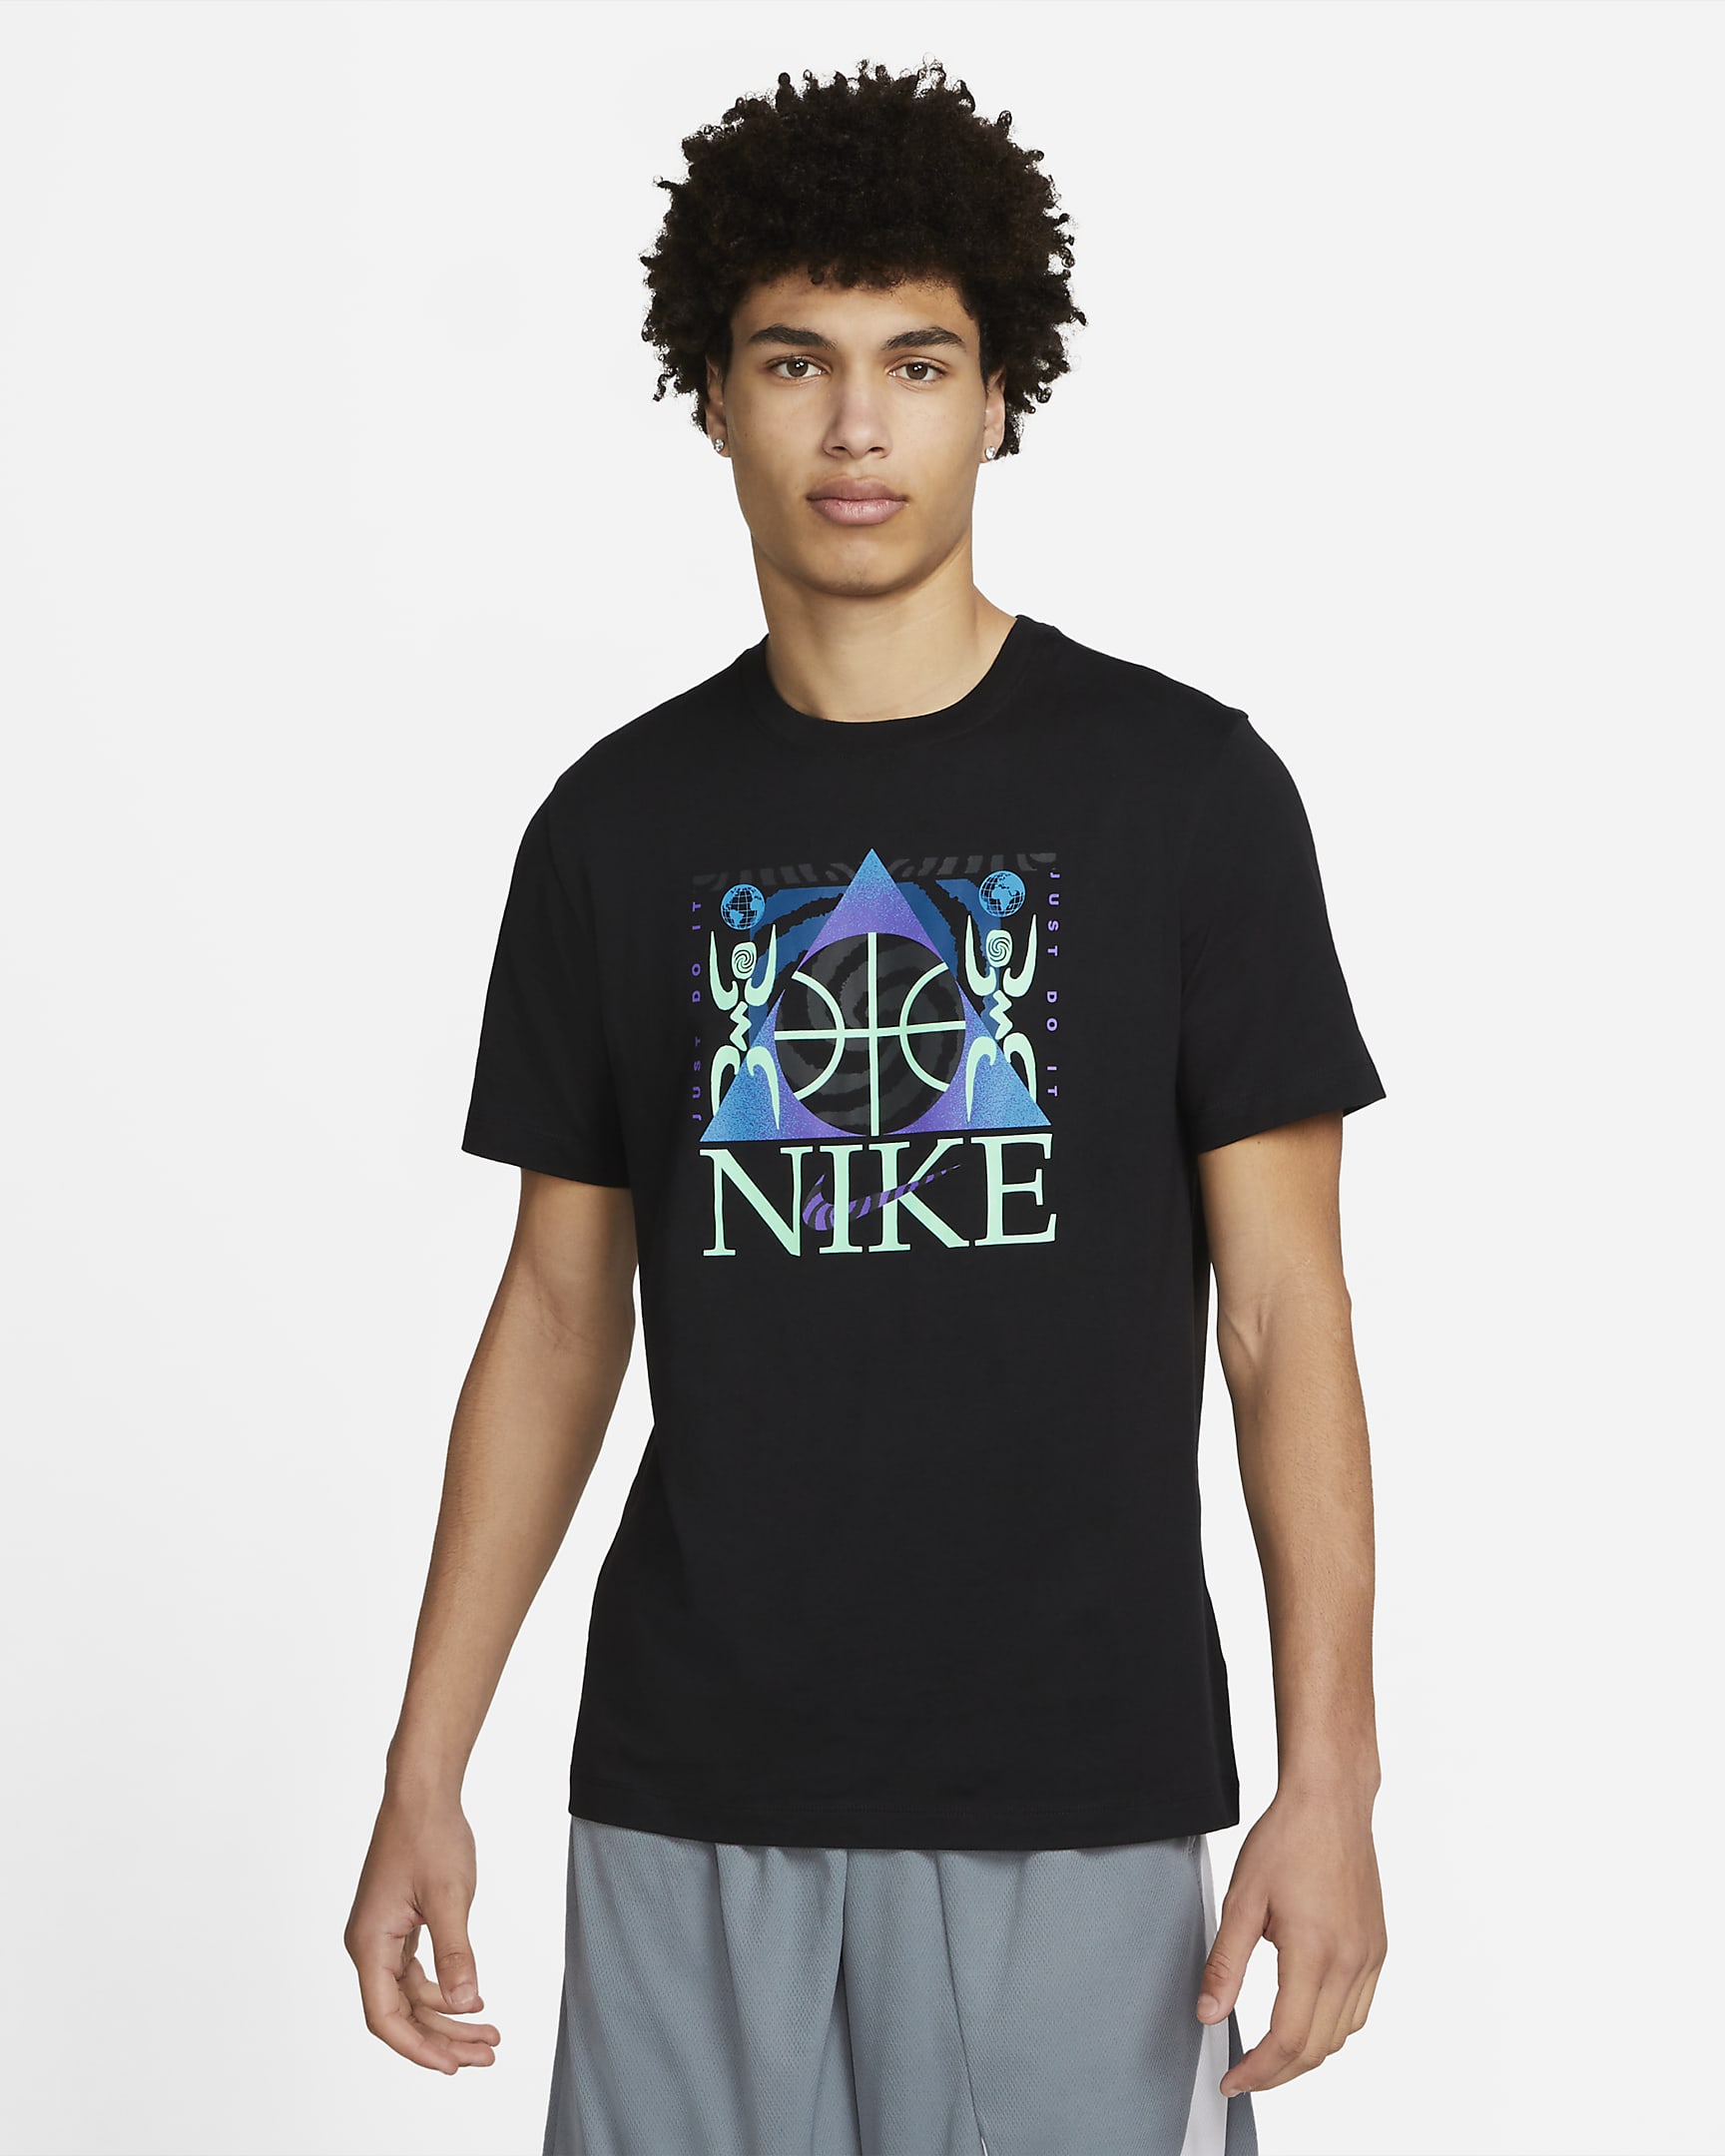 Nike Men\'s Basketball T-Shirt Black